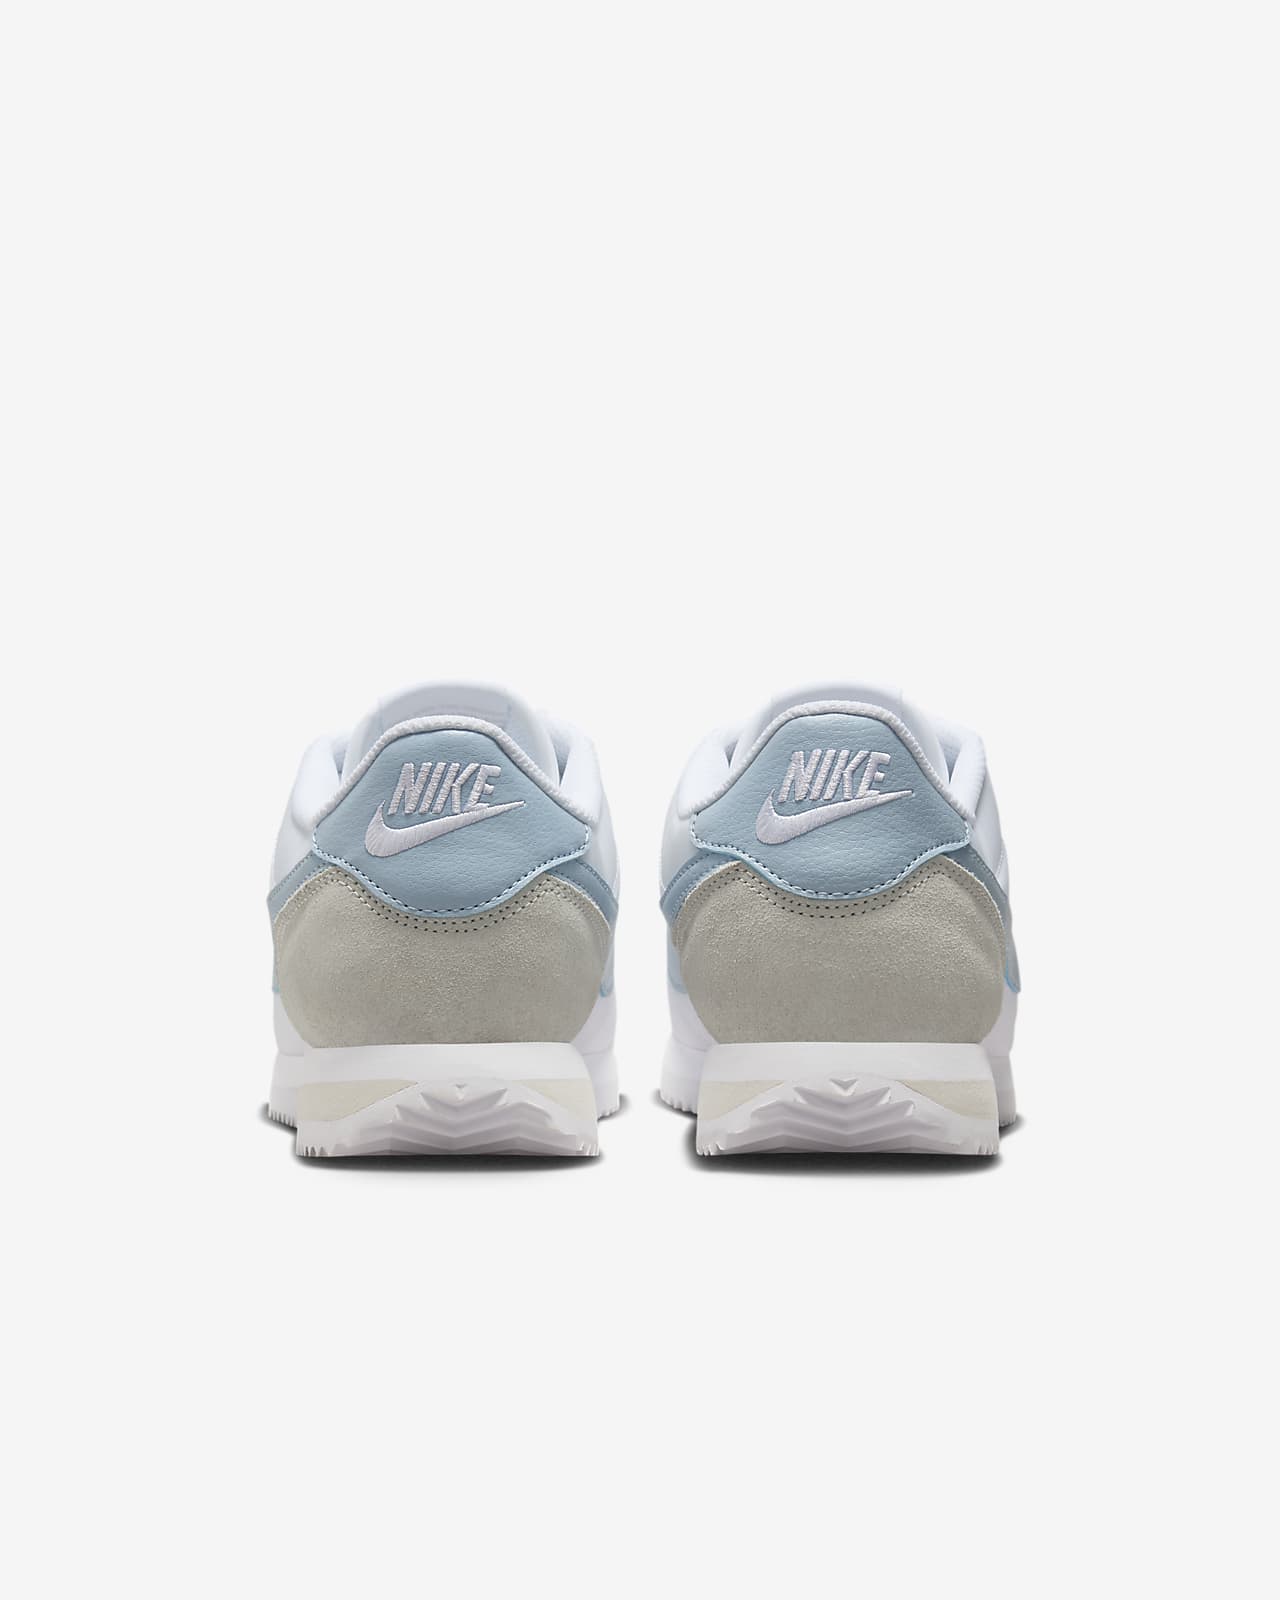 Nike Cortez Women's Shoes